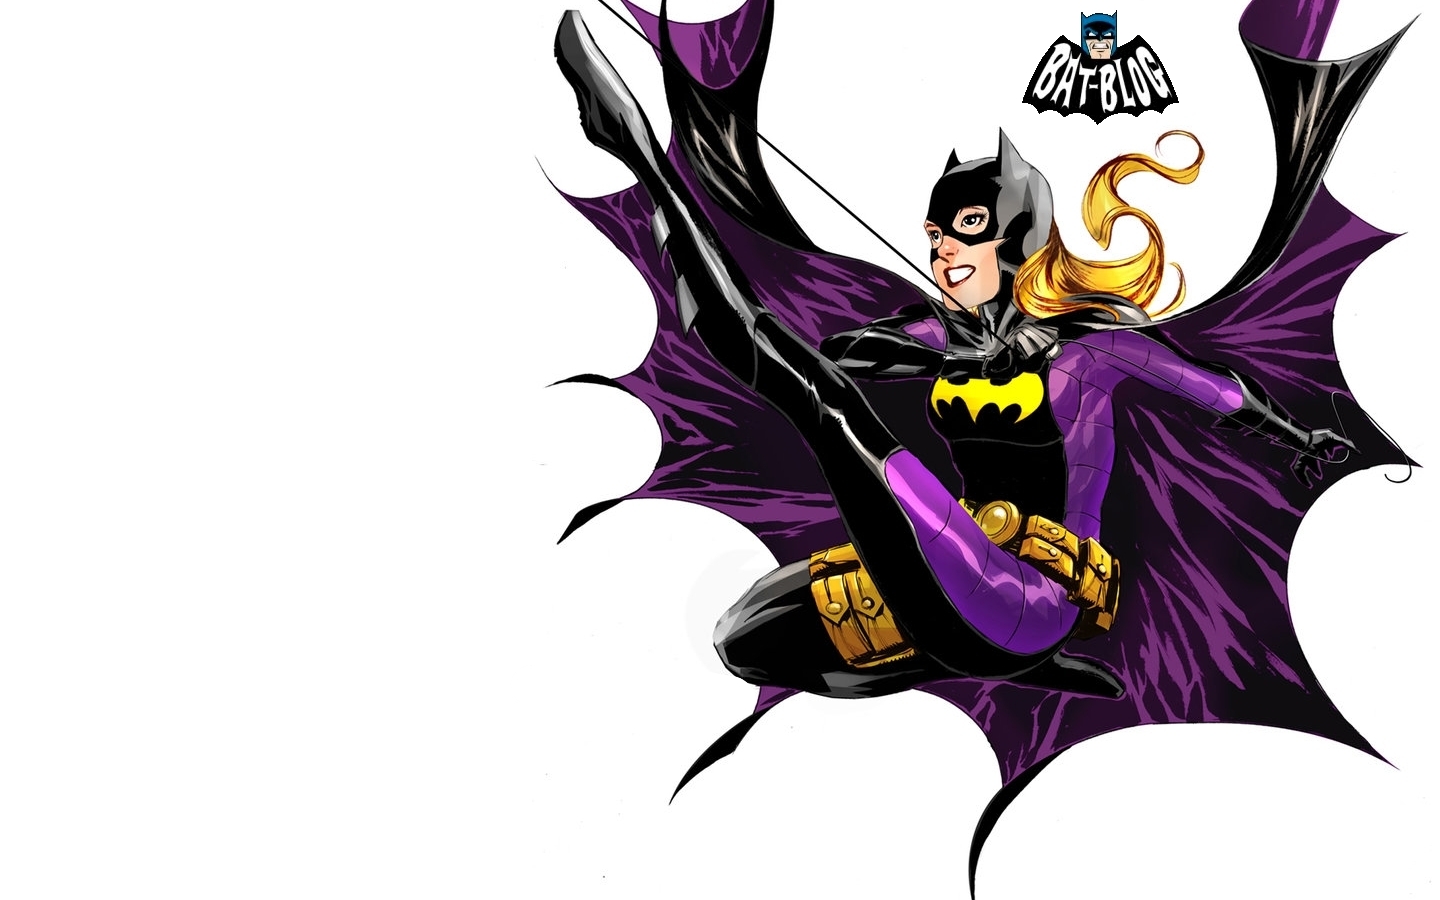 New Batgirl Wallpapers With Dustin Nguyen S Comic Book Art